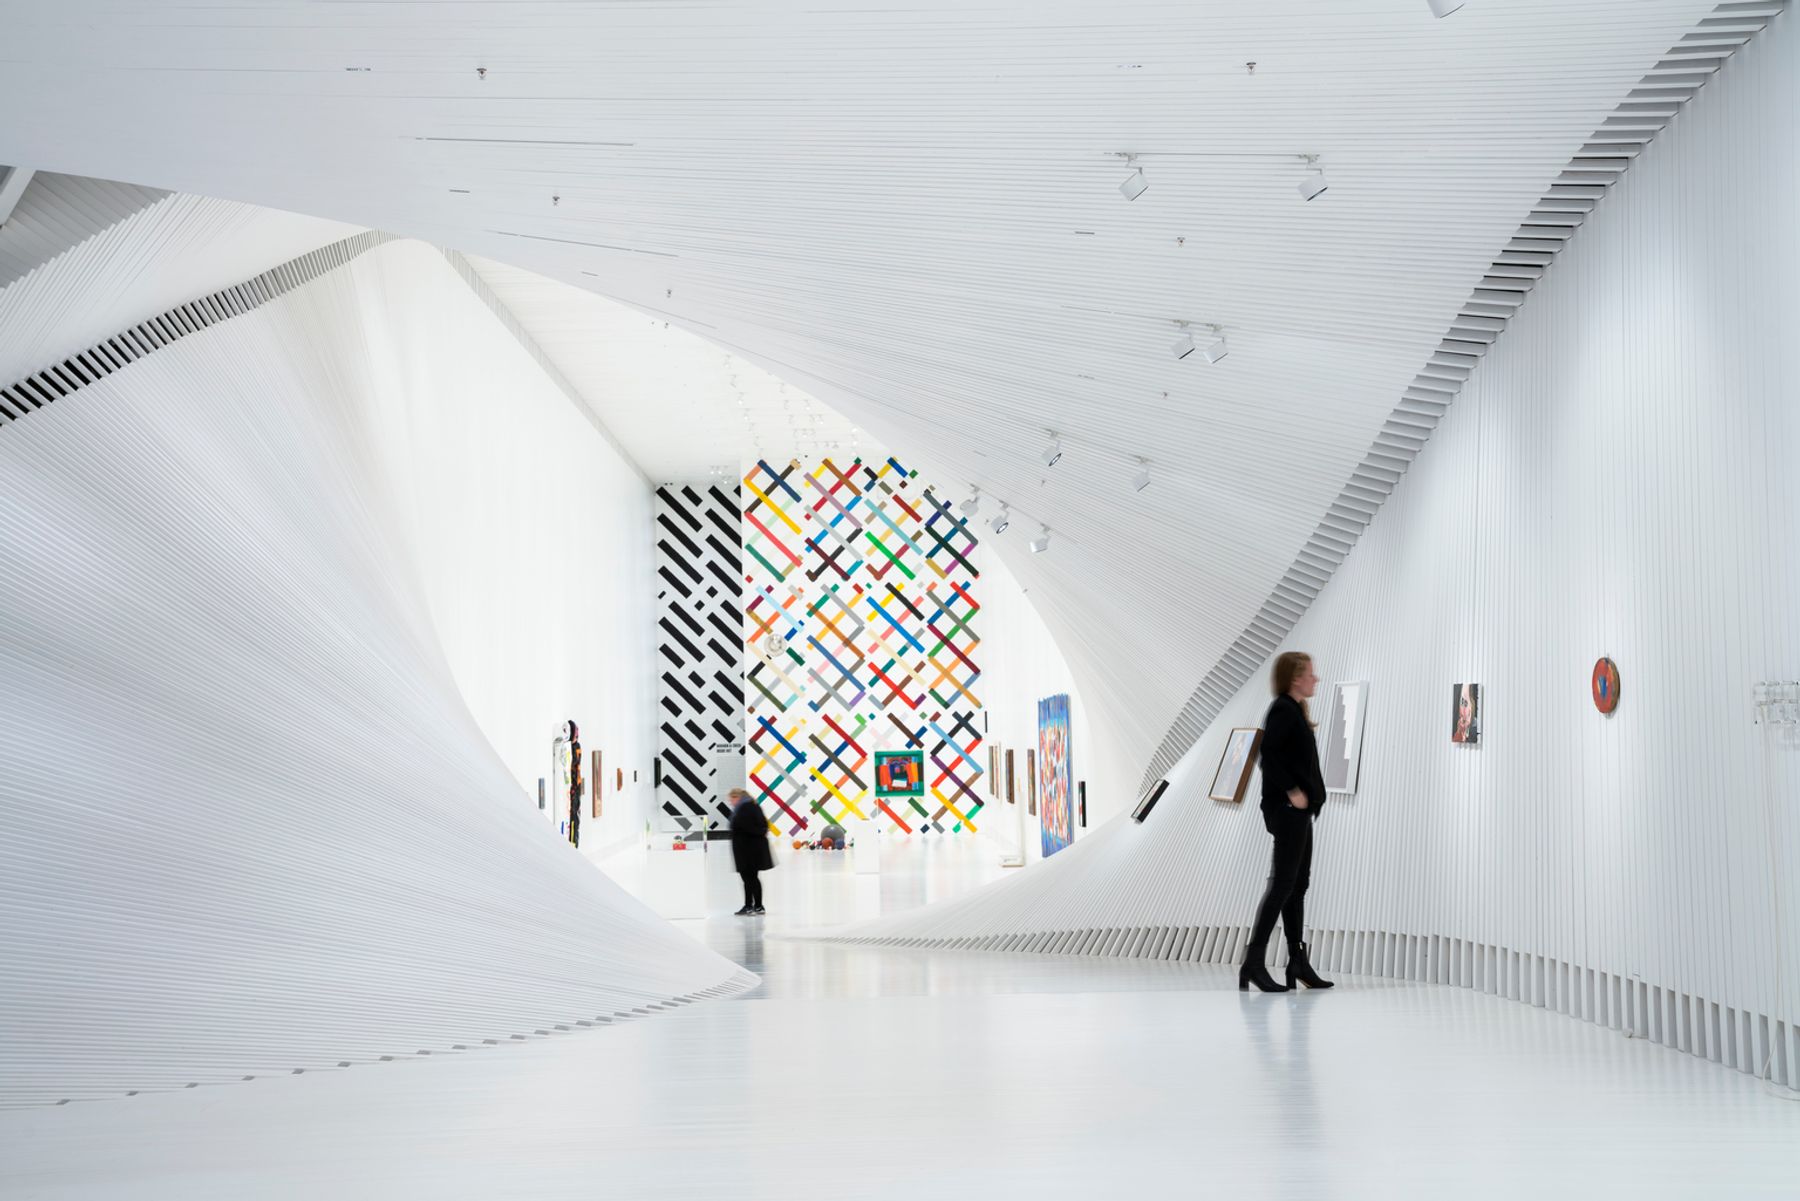 The Twist at Kistefos, Jevnaker. Architettura: BIG Bjarke Ingels Group, Copenaghen. Progettazione illuminotecnica: Light Bureau, Oslo. Fotografia: Tomasz Majewski, Oslo.